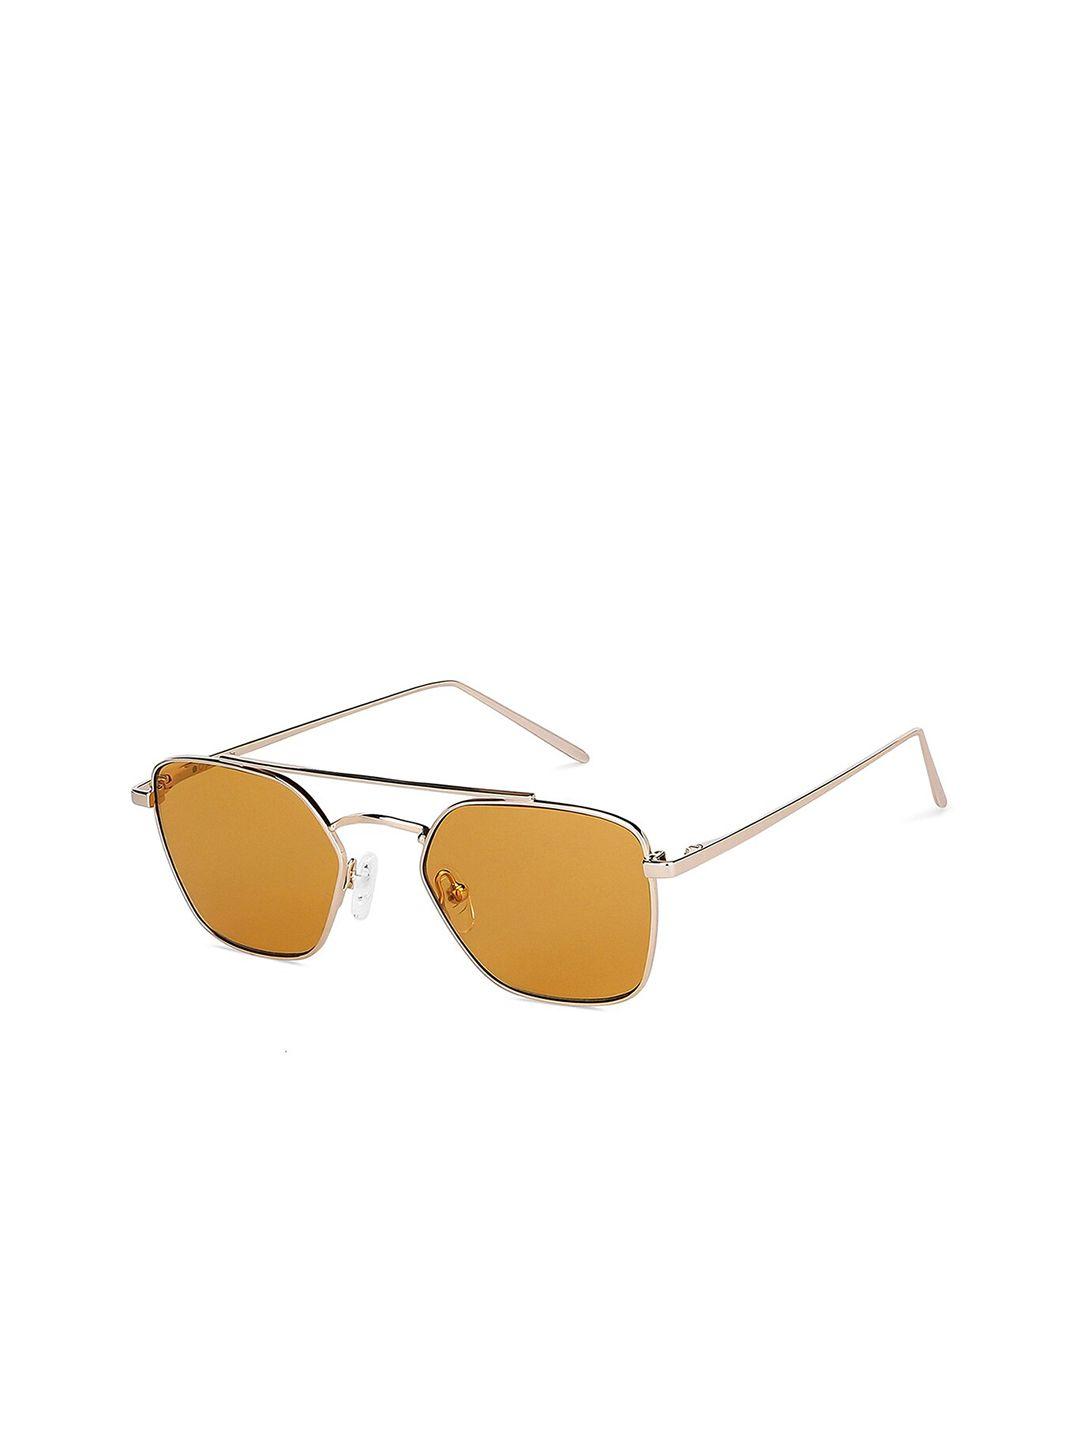 john jacobs unisex brown & gold-toned square sunglasses